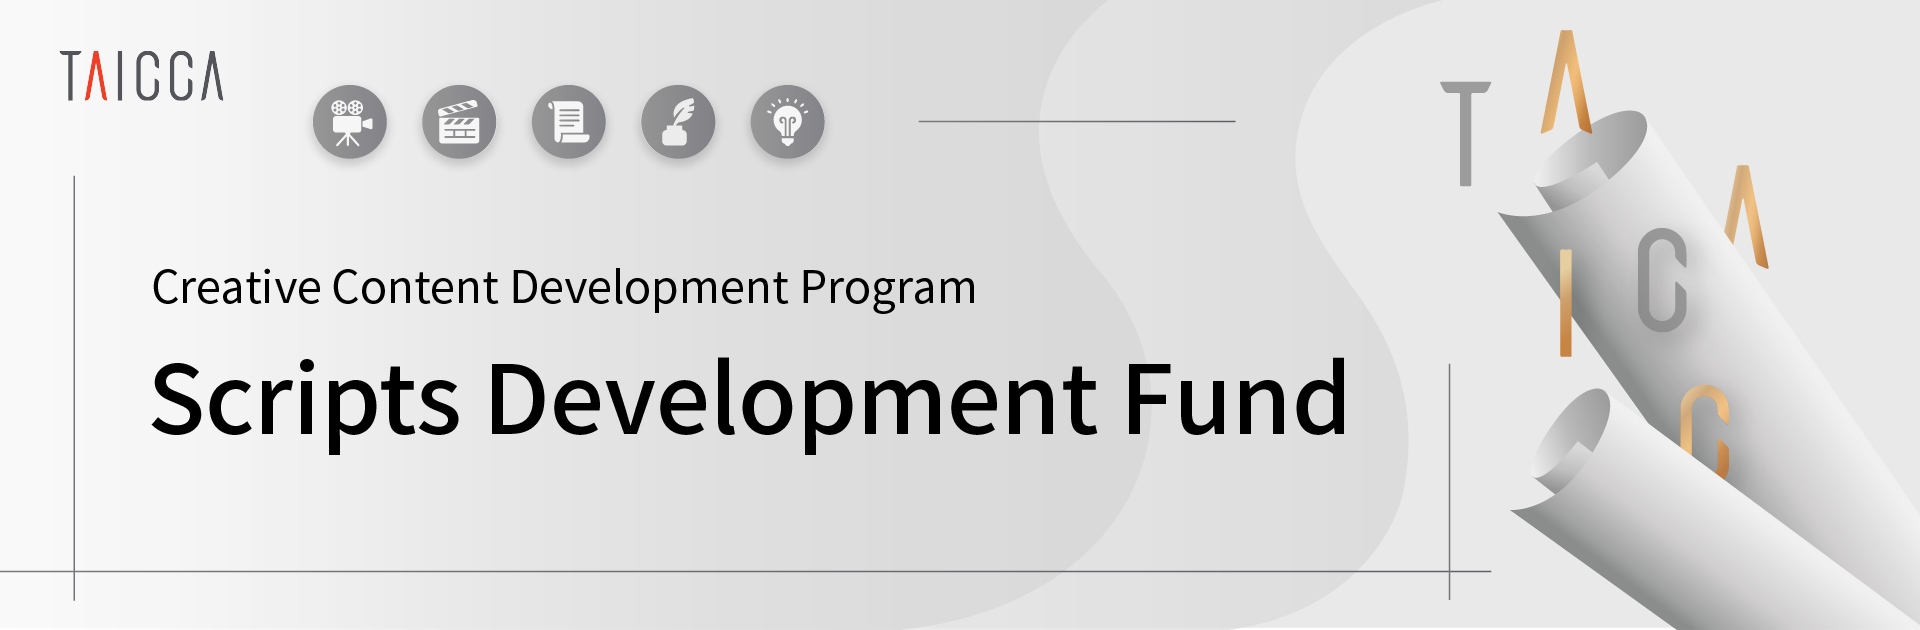 TAICCA’s Creative Content Development Program (CCDP)